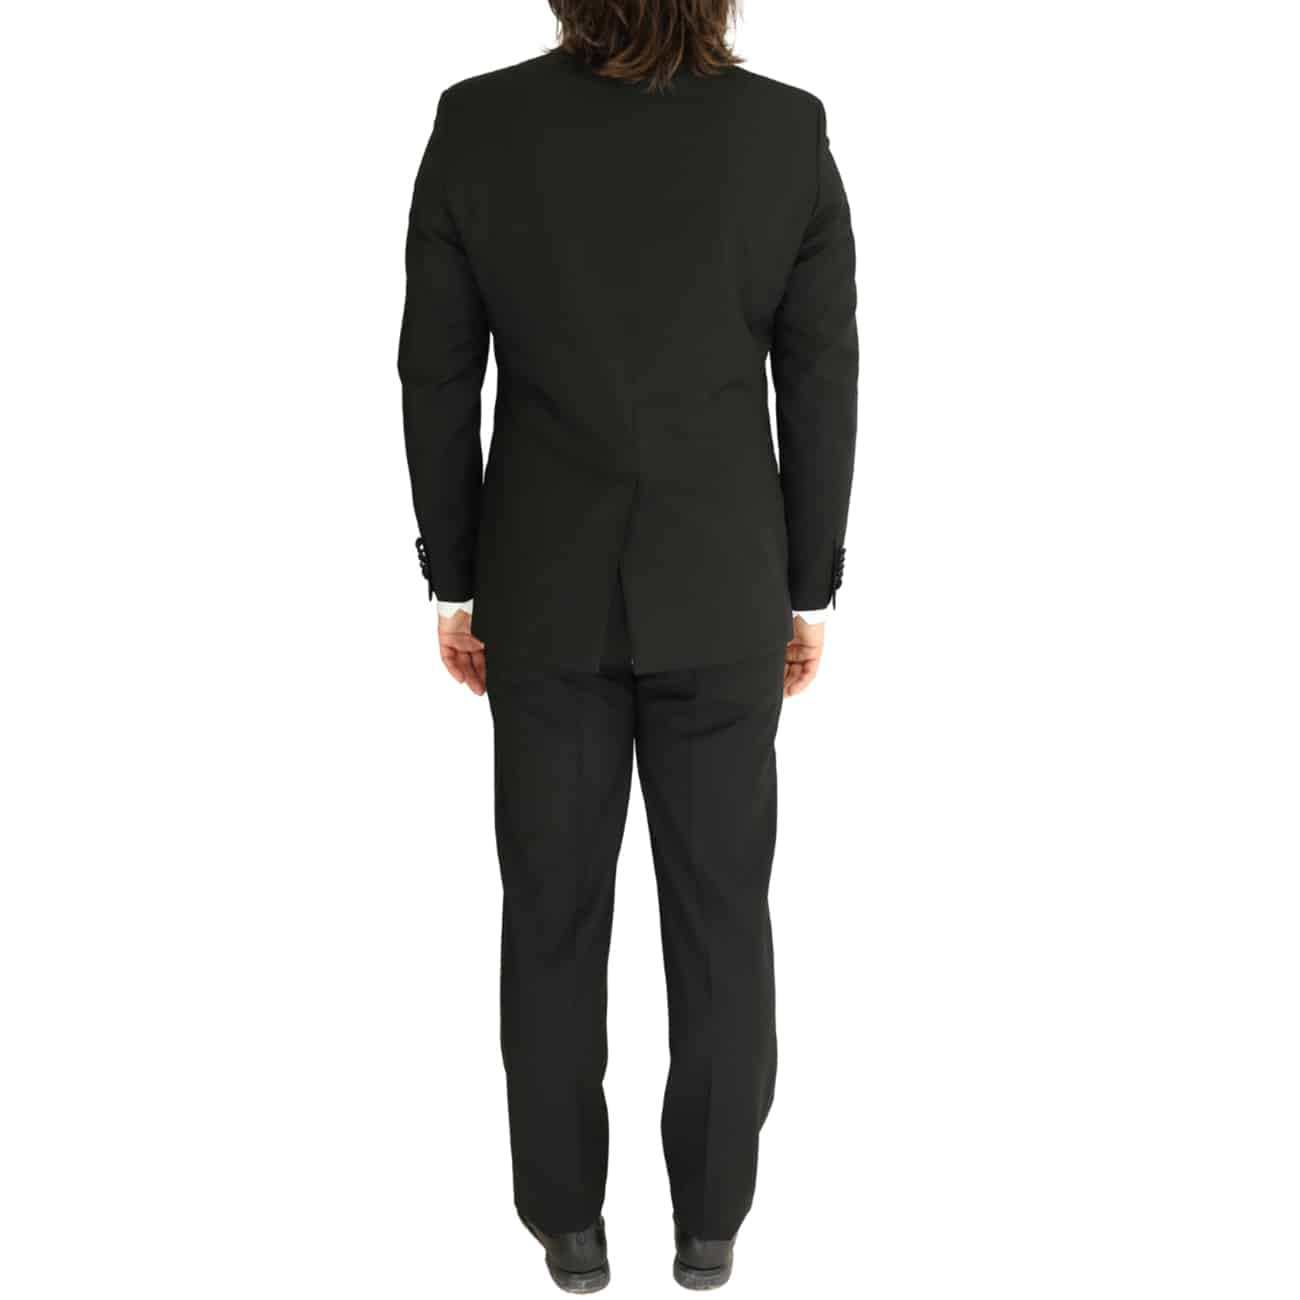 WITHOUT PREJUDICE BLACK DRESS SUIT | Menswear Online